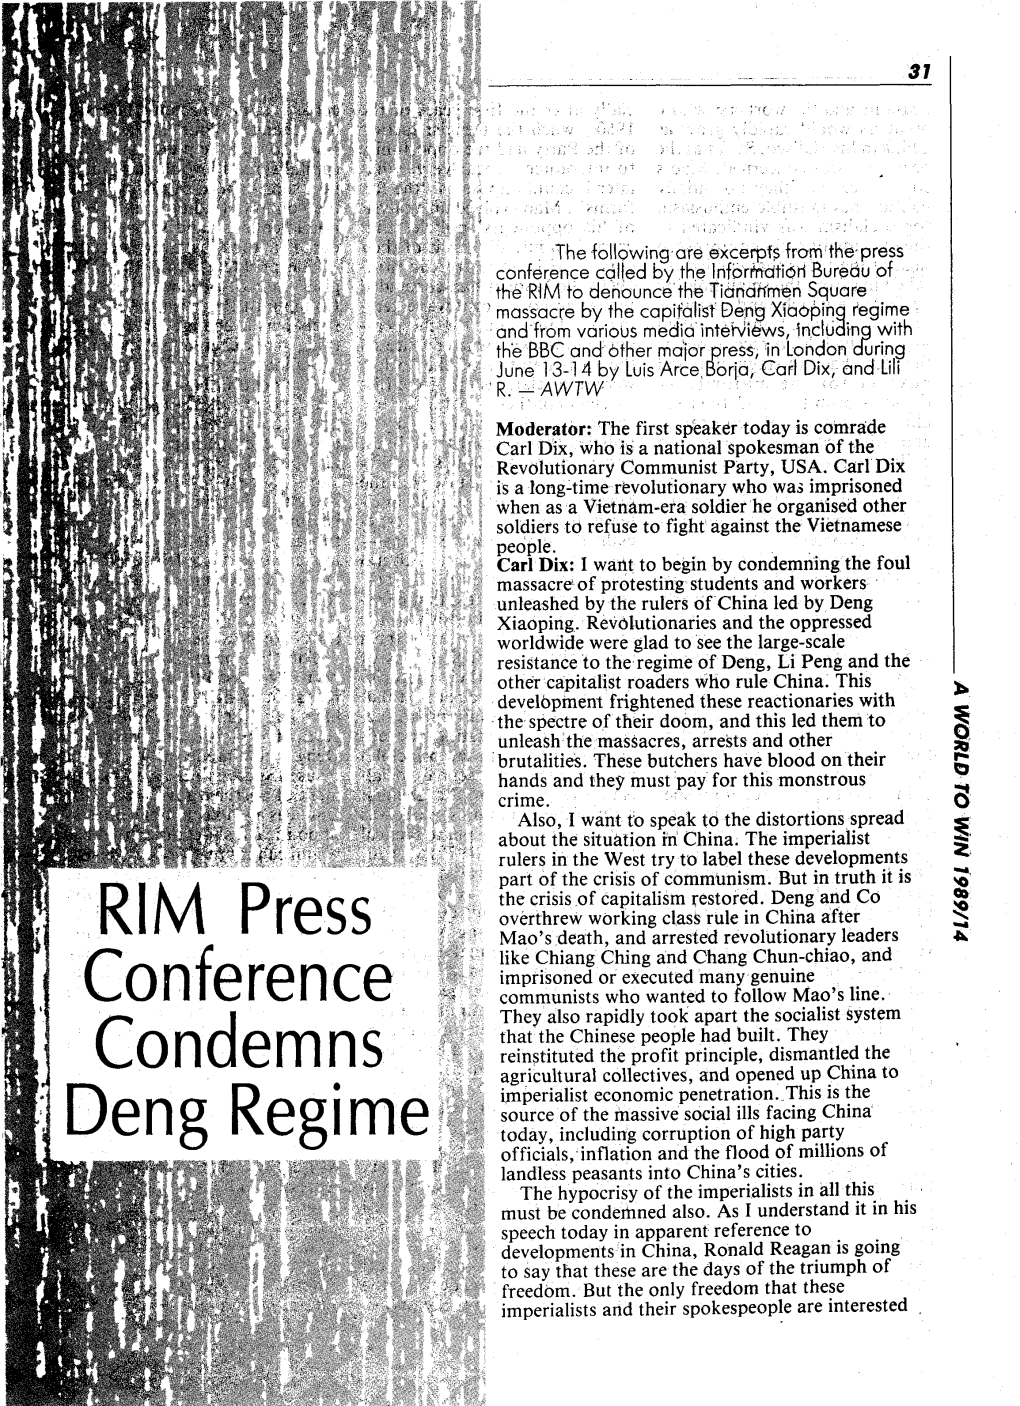 RIM Press Conference Condemns Deng Regime